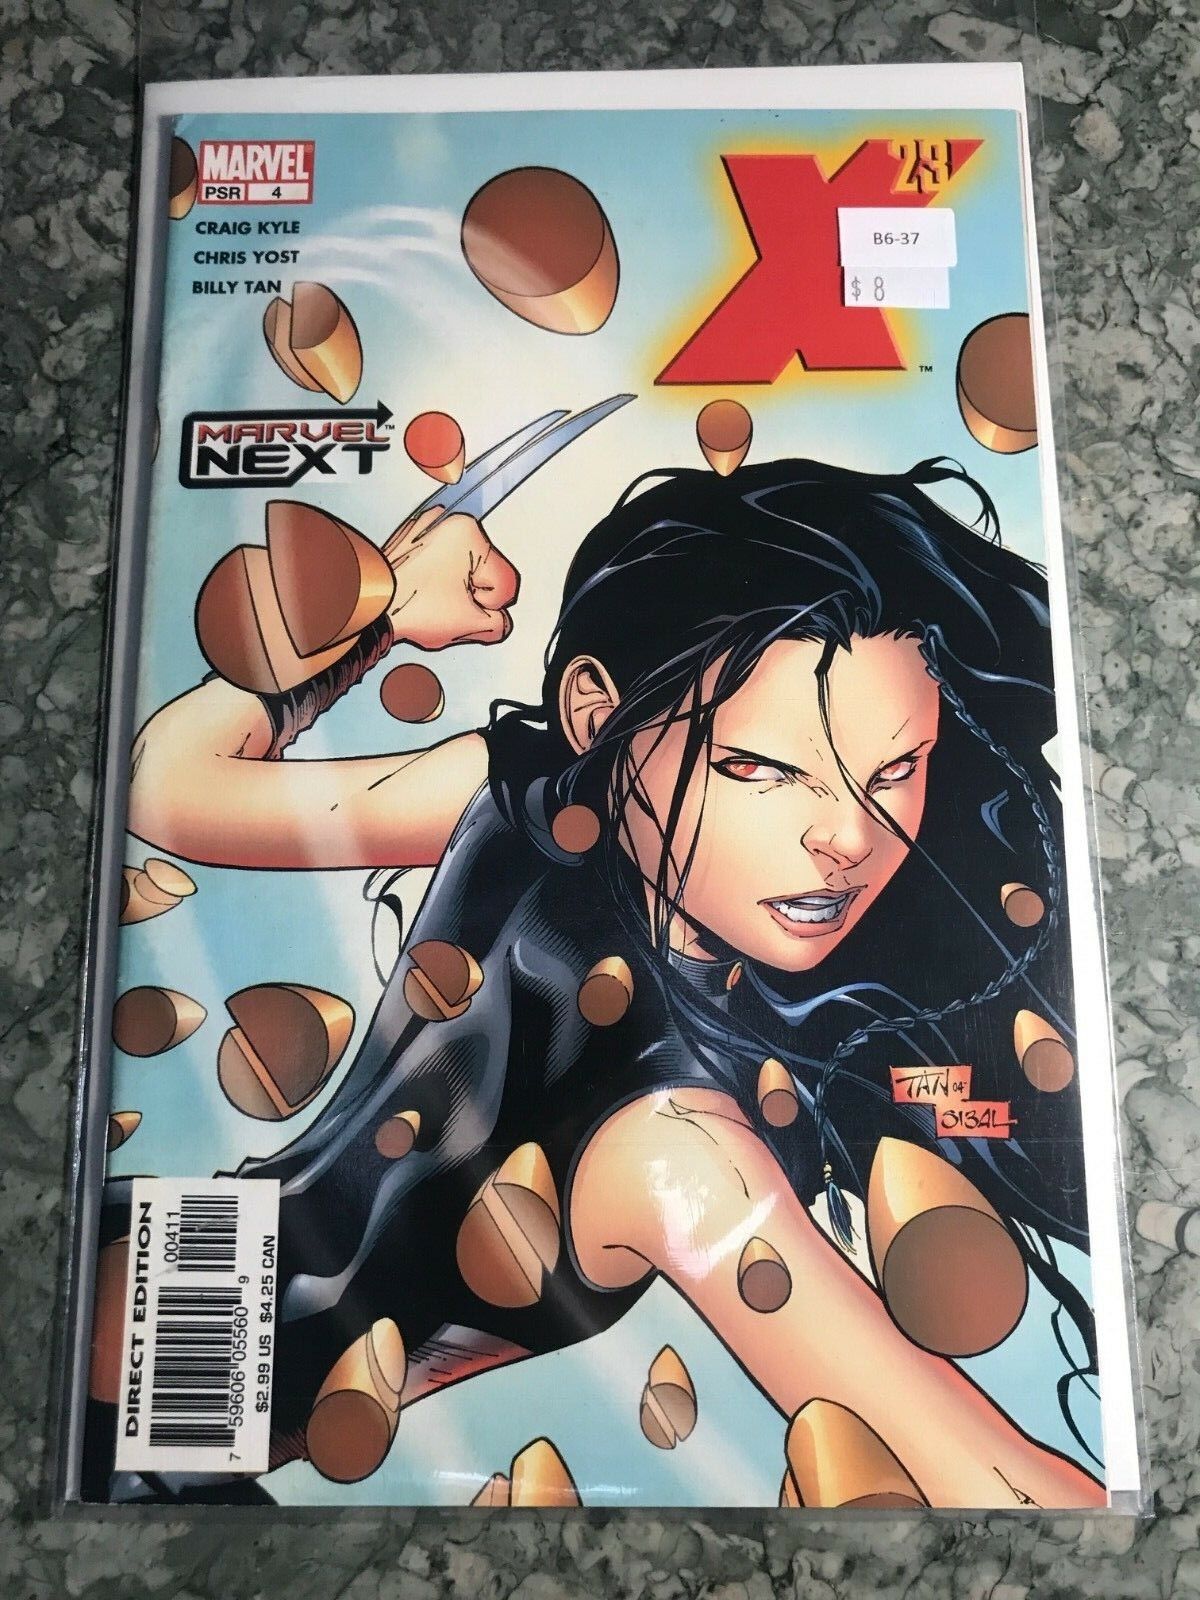 X-23 vol.1 #4 2005 Marvel Next High Grade 8.0 Marvel Comic Book B6-37